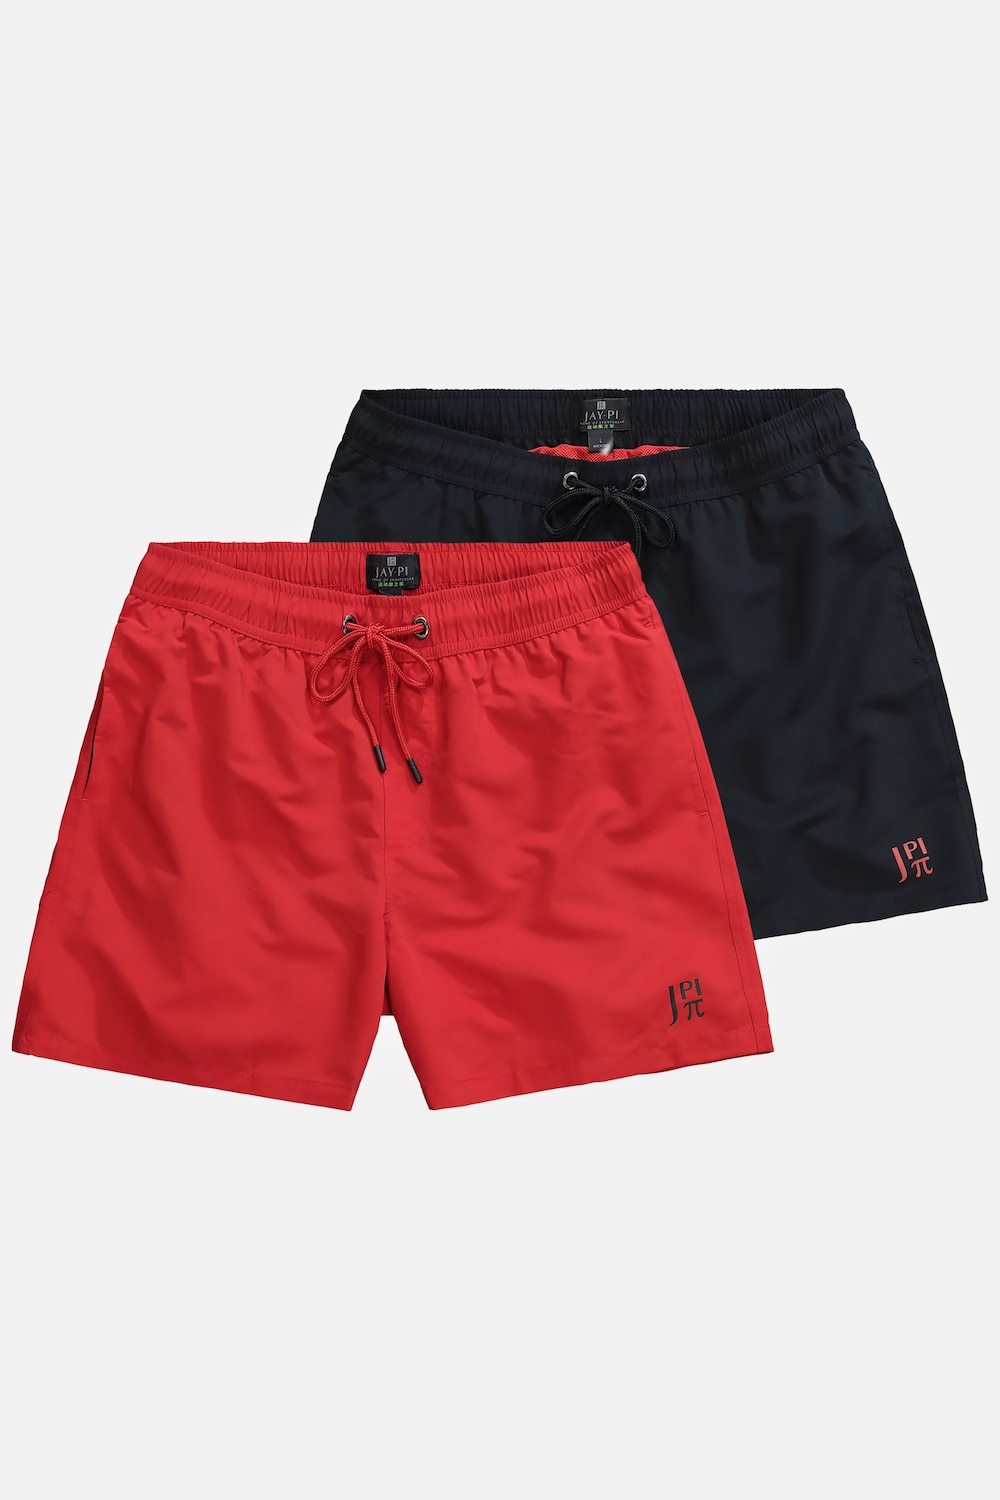 grandes tailles shorts de bain jay-pi avec taille élastique, femmes, rouge, taille: 3xl, polyester, jay-pi